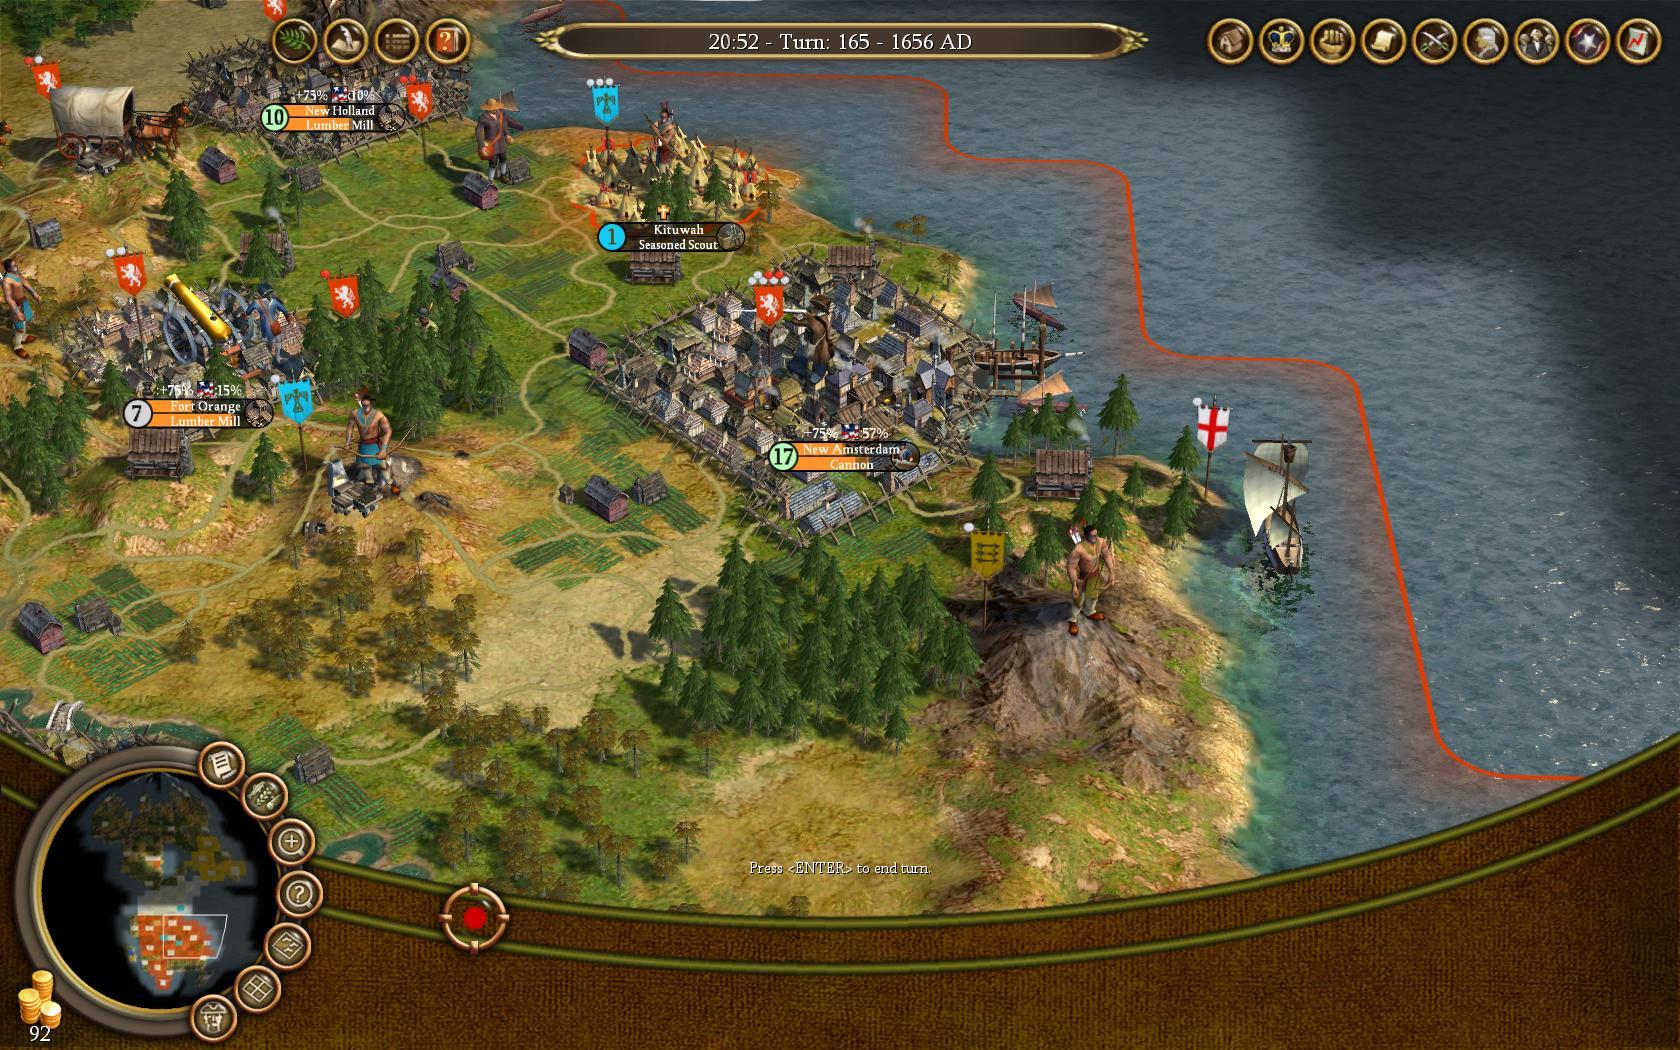 Sid Meier's Civilization IV: Colonization